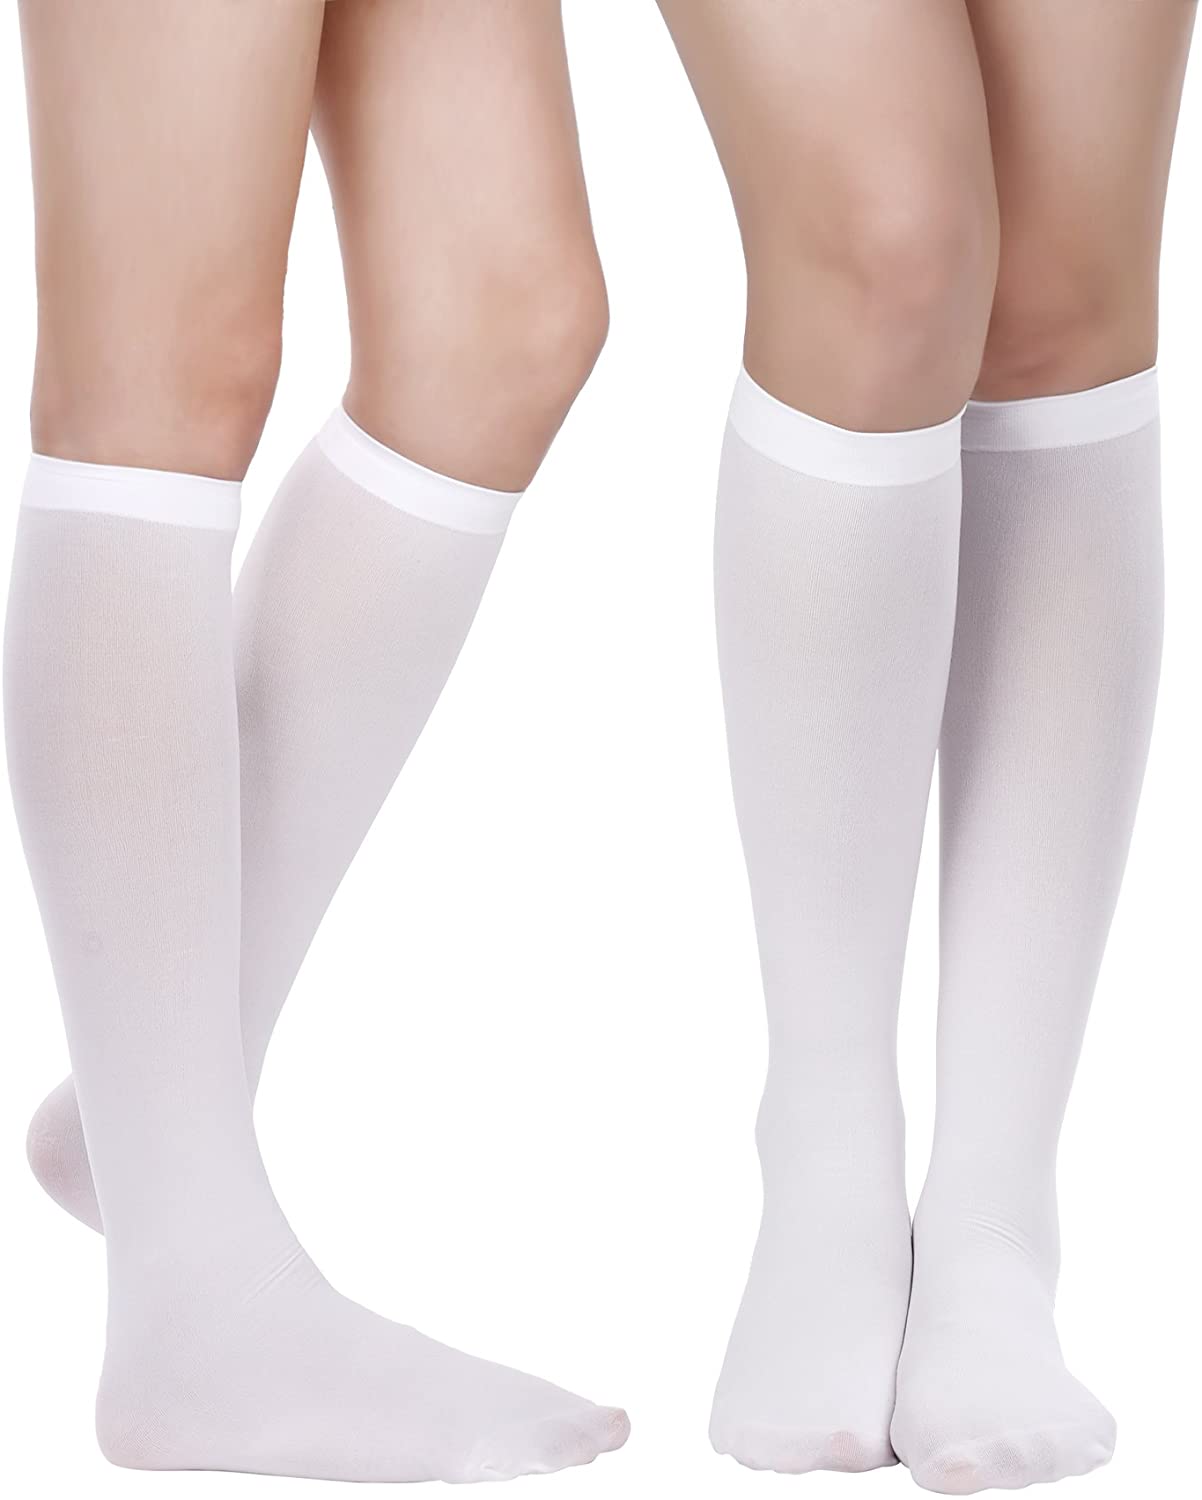 Knee-high stockings